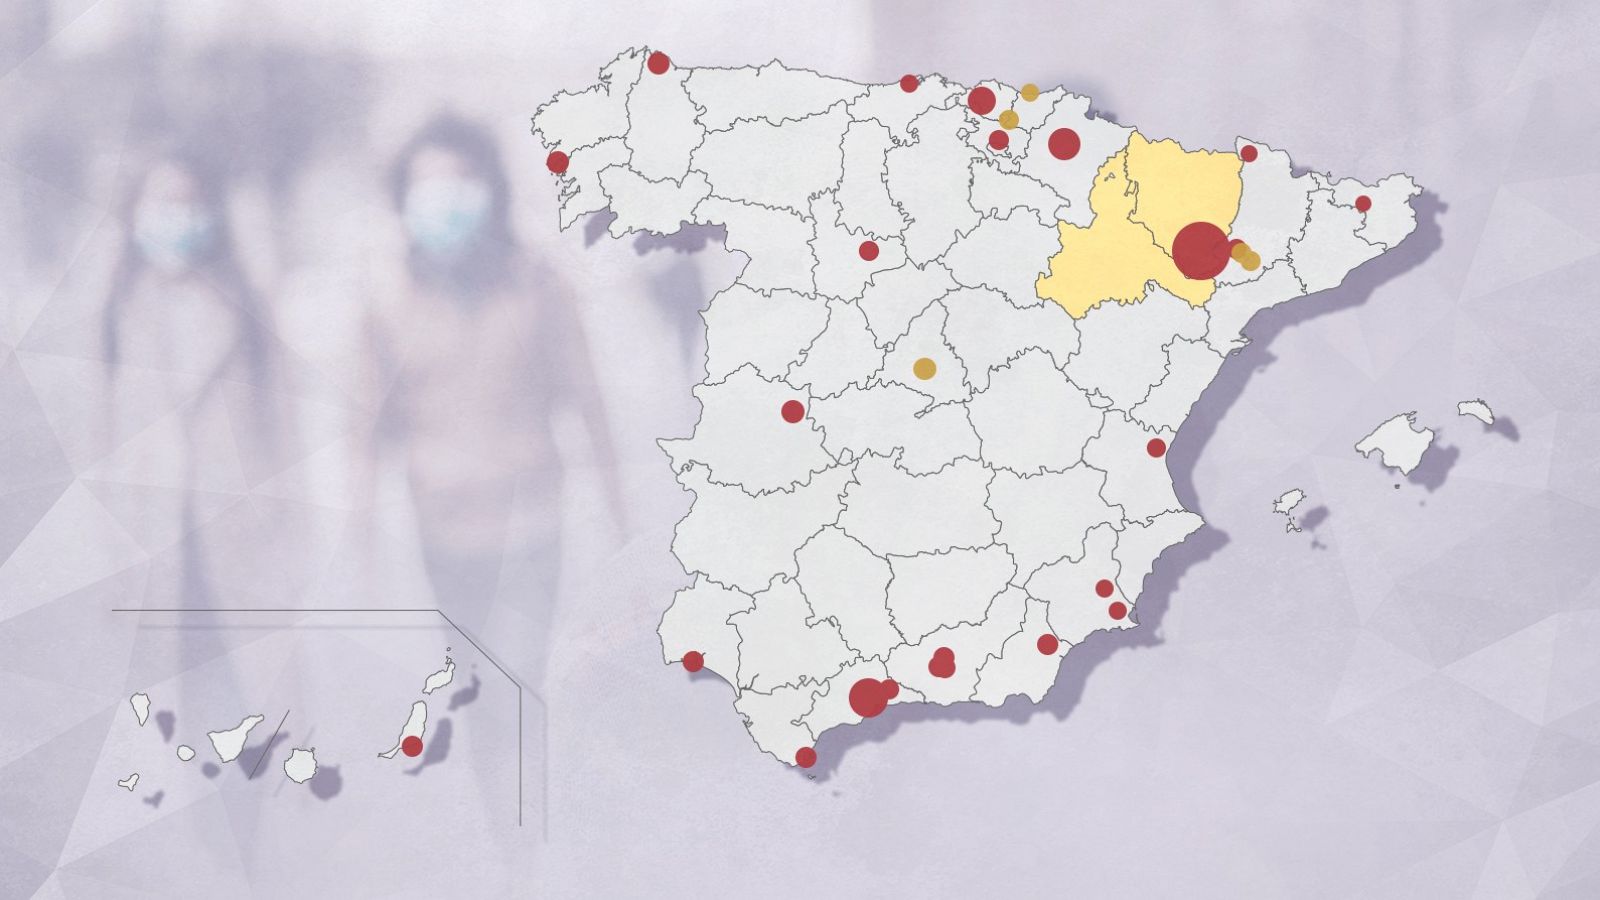 España registra 51 brotes de coronavirus - RTVE.es